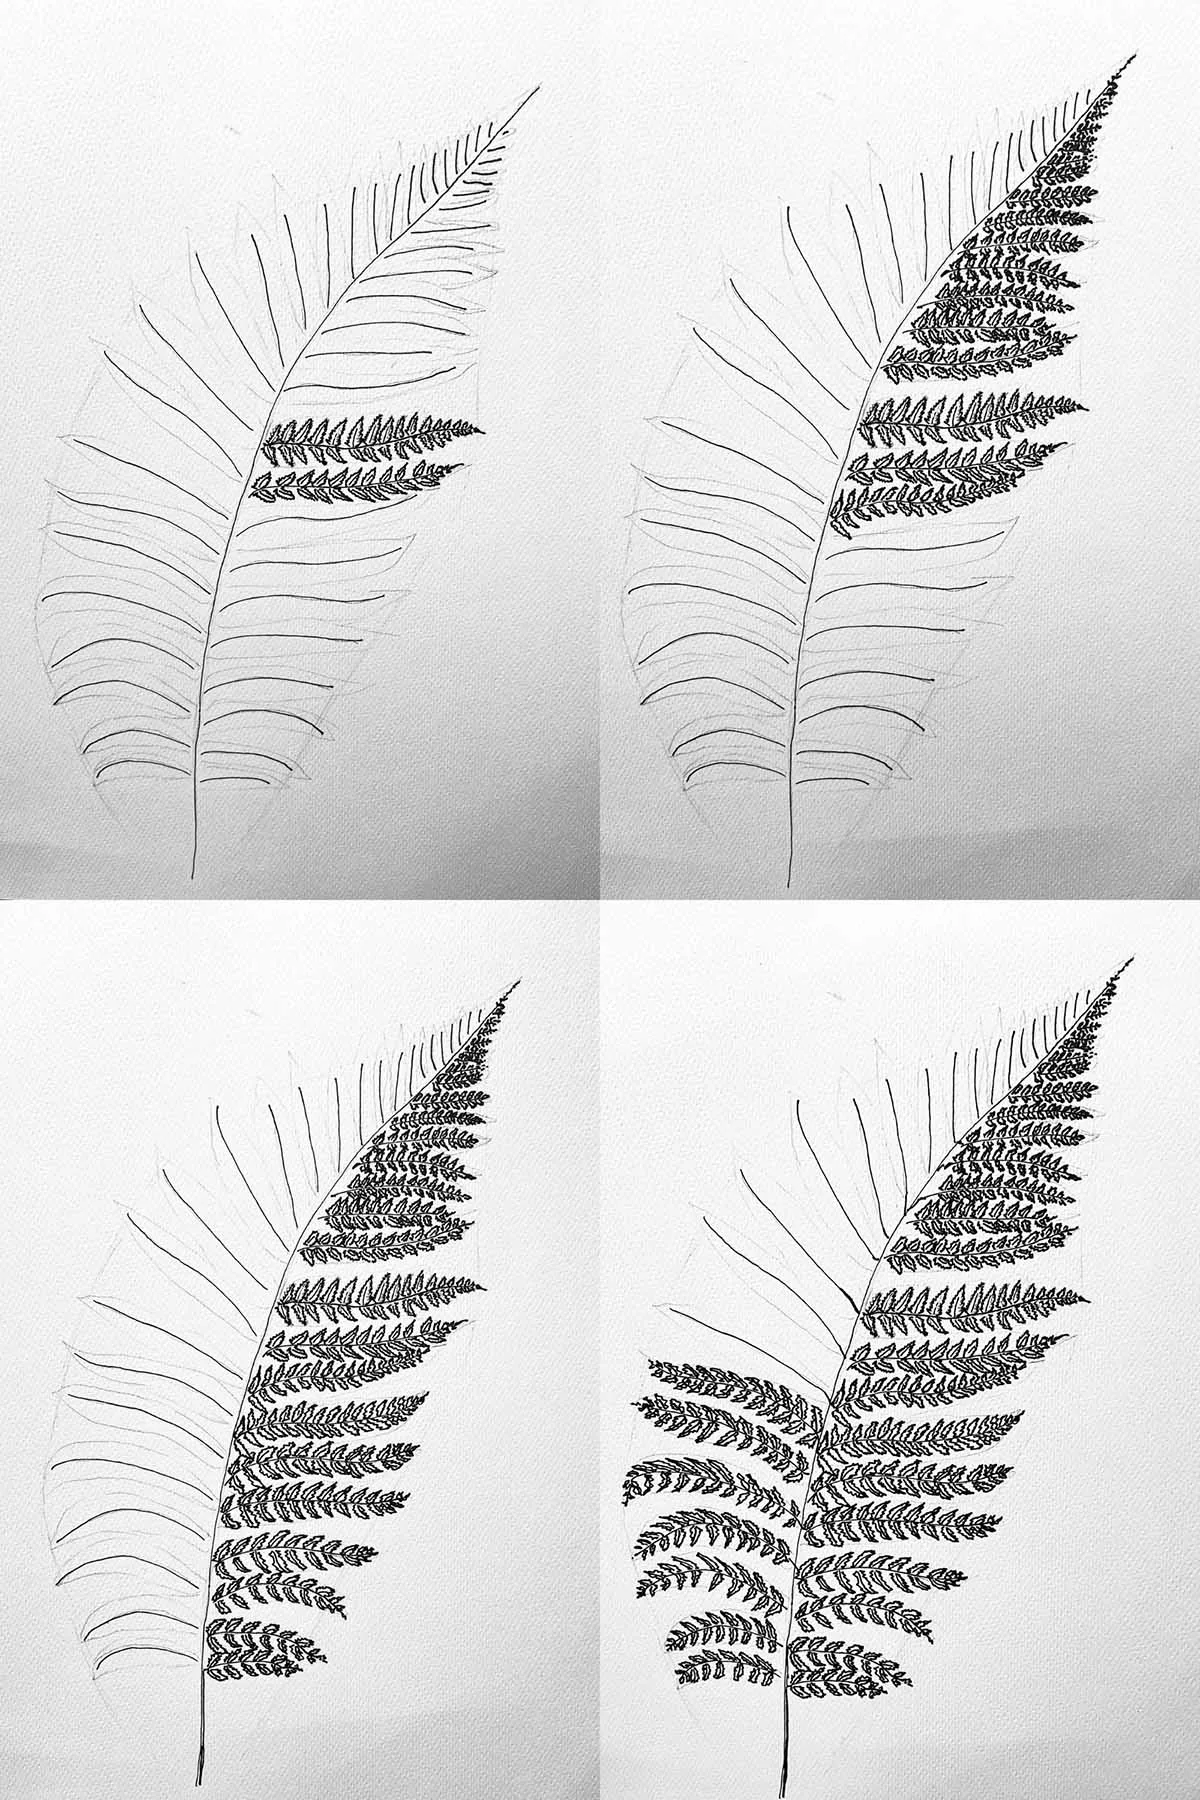 Tree Fern drawing steps